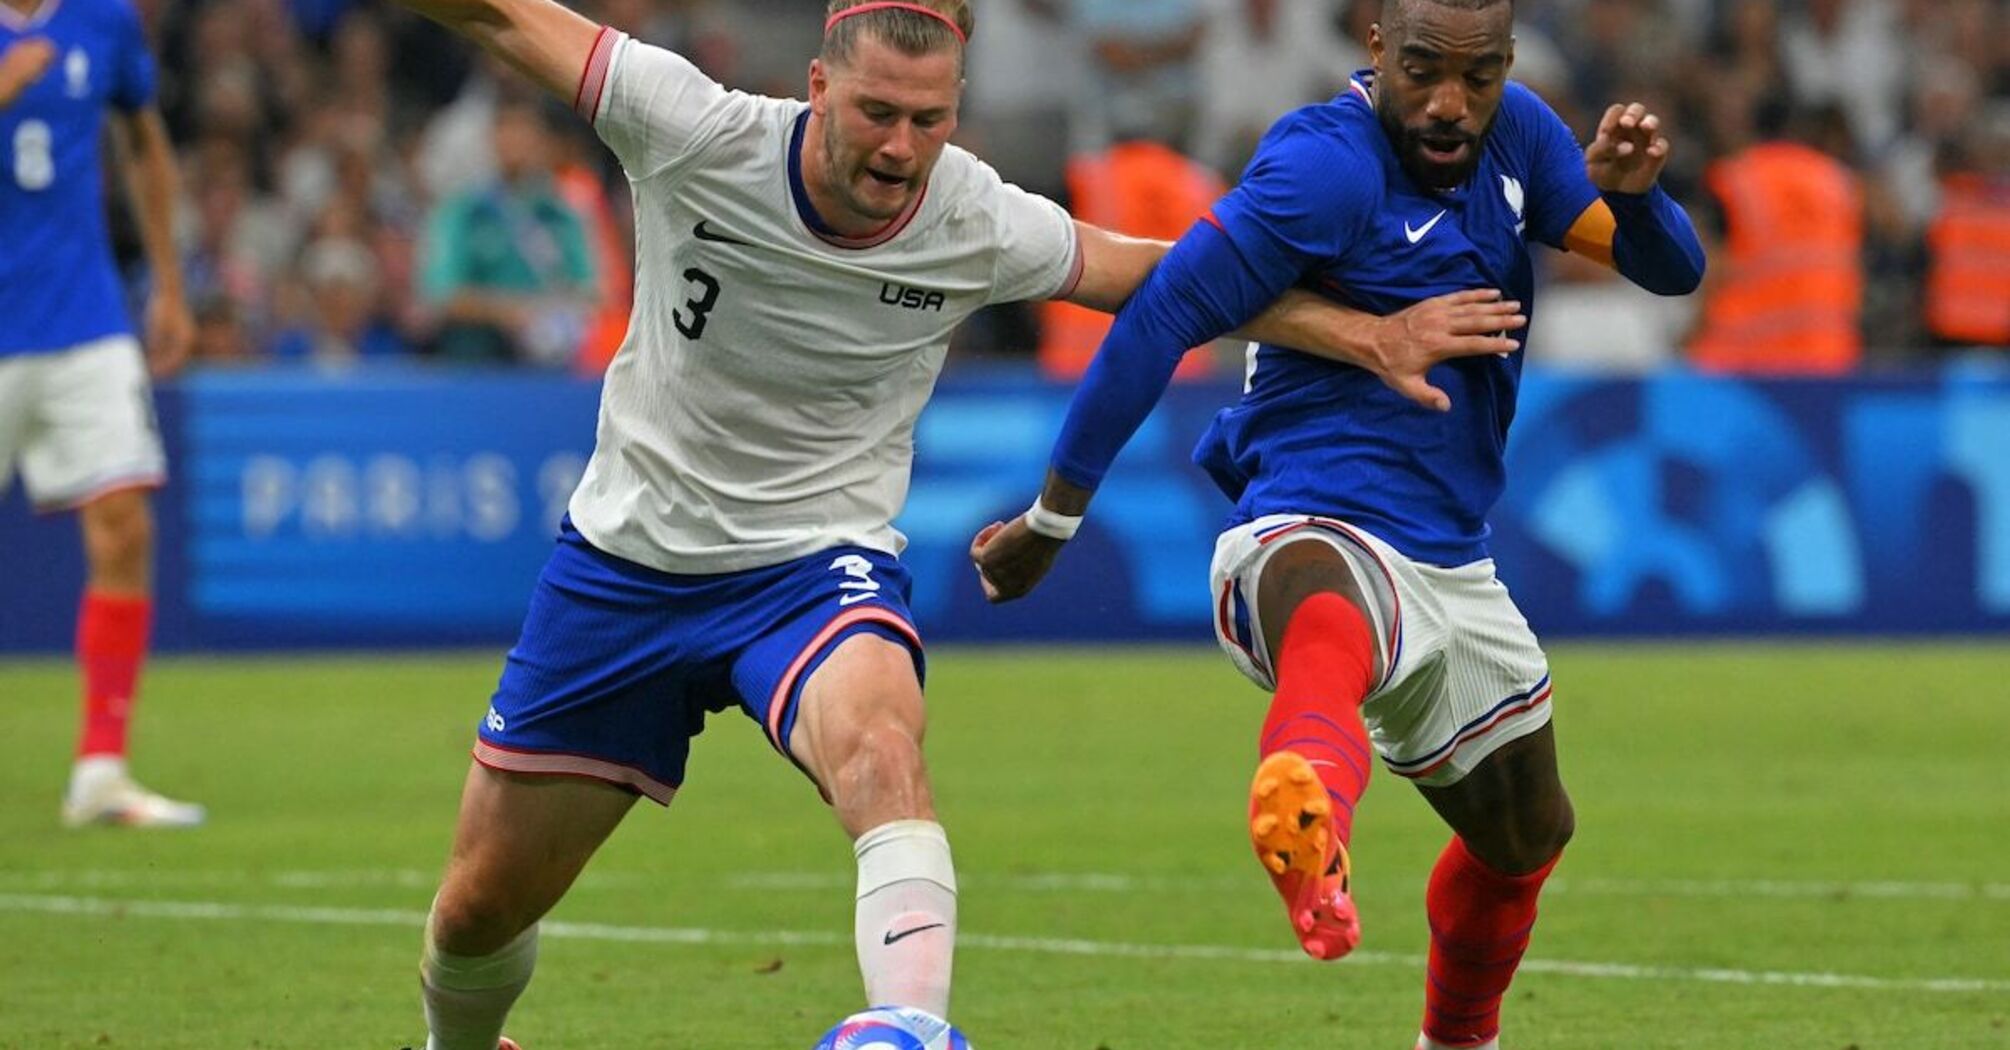 US men's soccer team endured a difficult start 